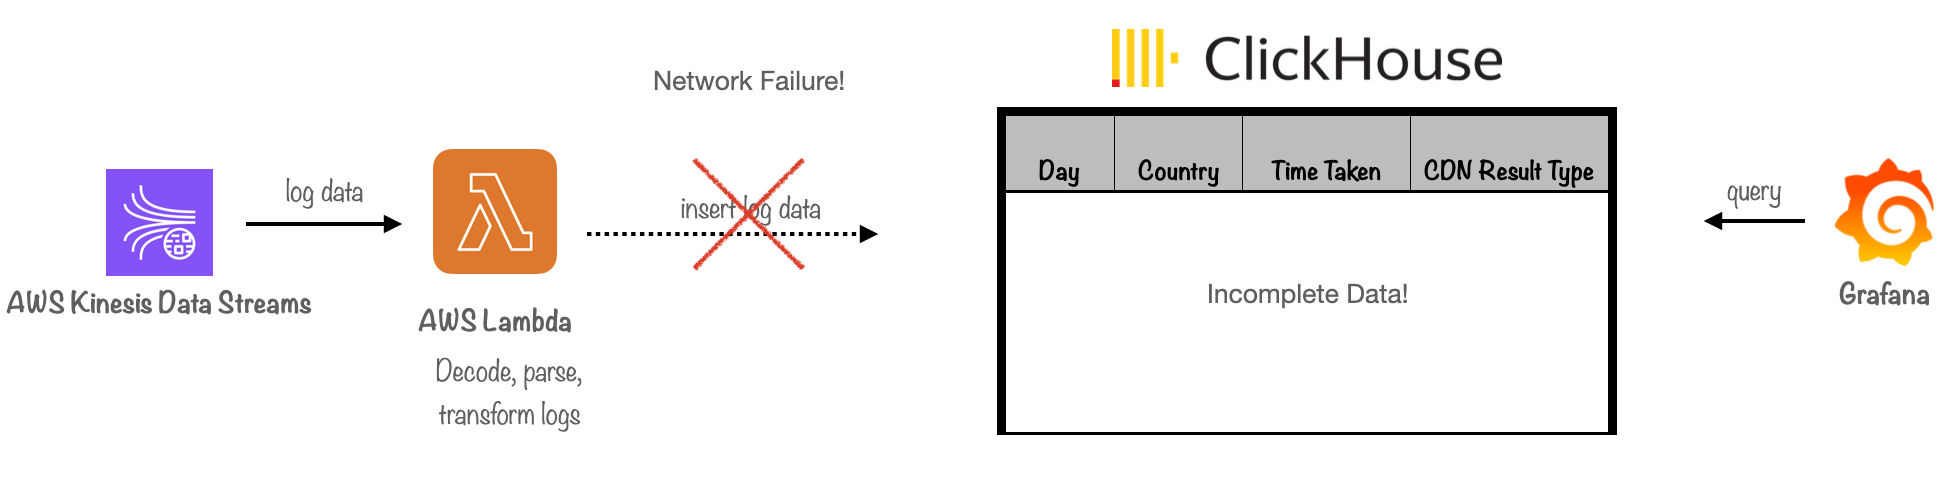 network Failure Incomplete Data